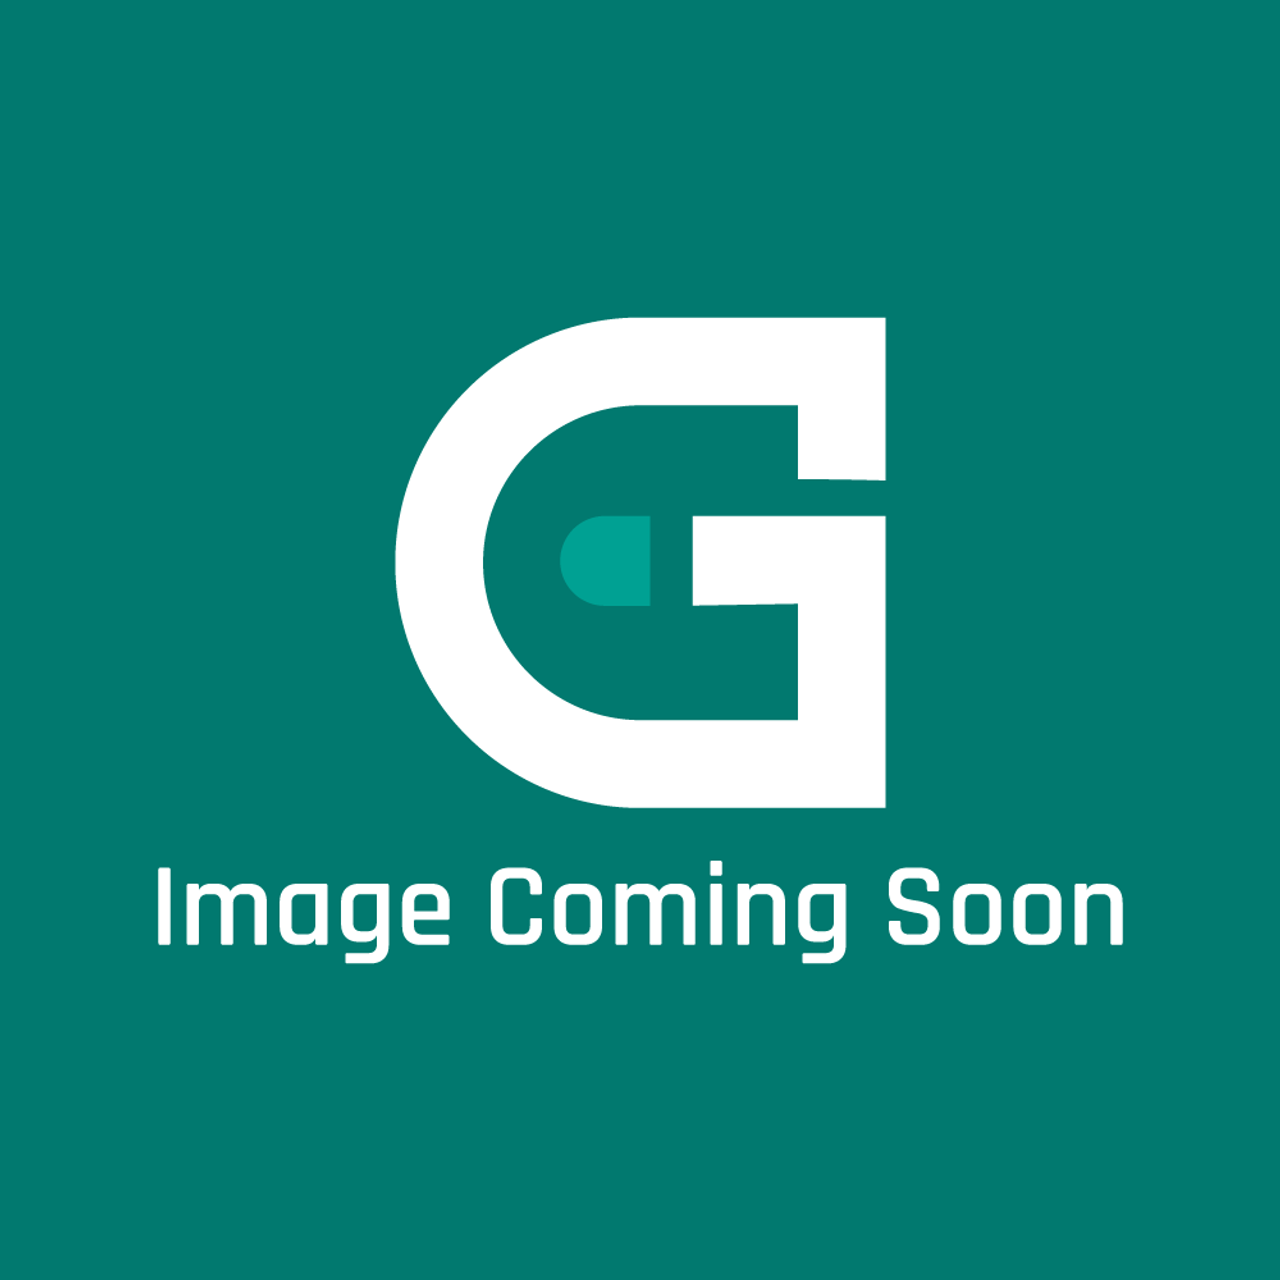 Star Mfg PSZ10286 - Qt14R Drive Motor Cwr-L - Image Coming Soon!